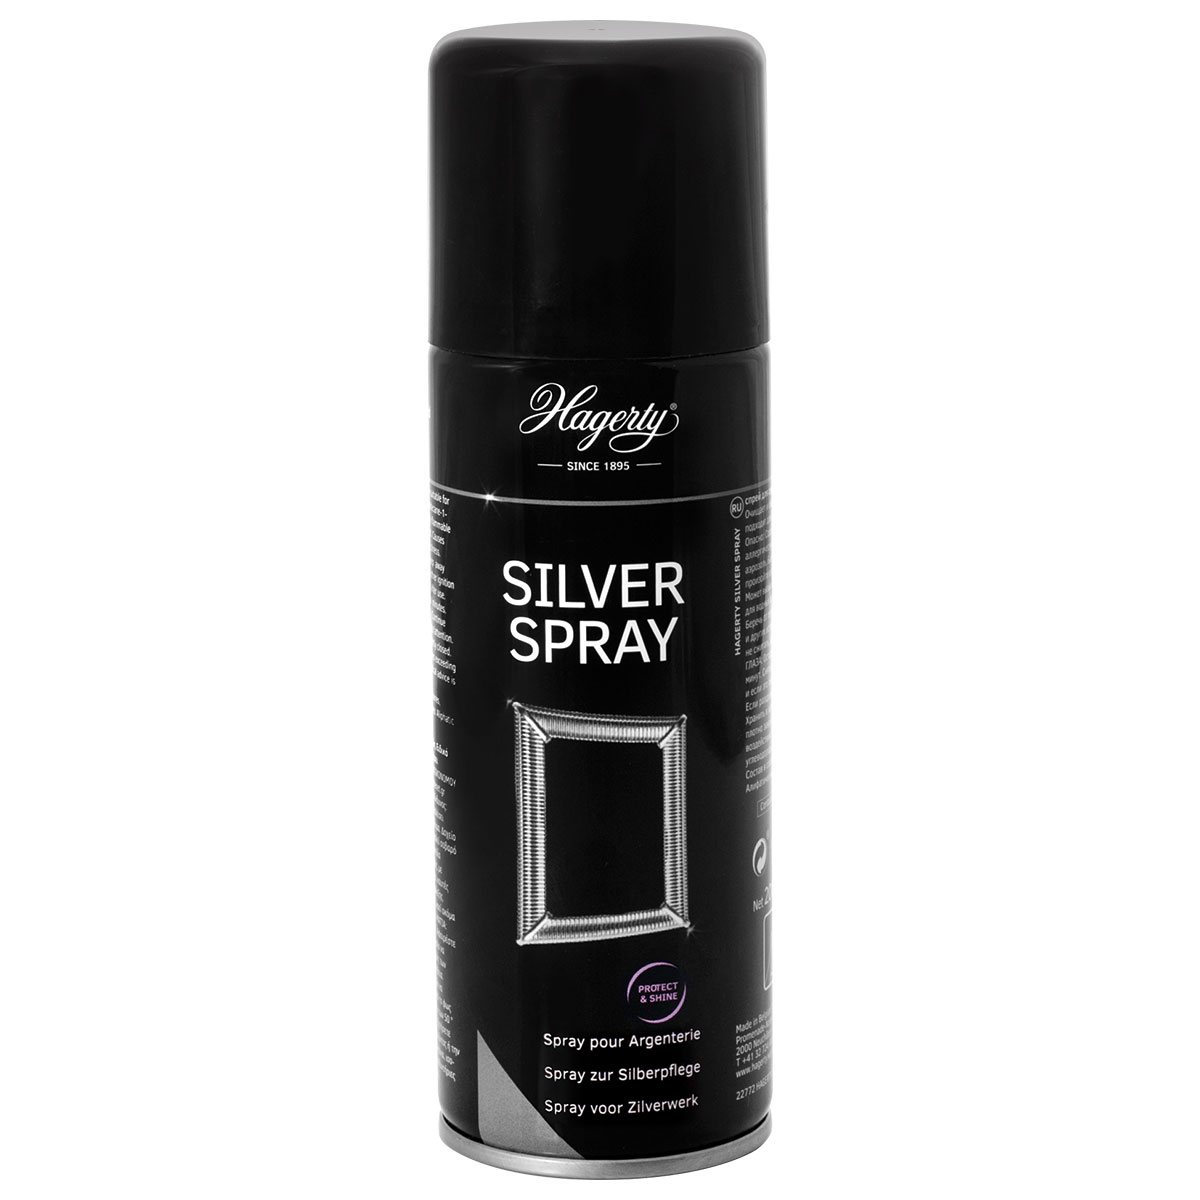 Hagerty Silver Spray, Silberpflegemittel, 200 ml